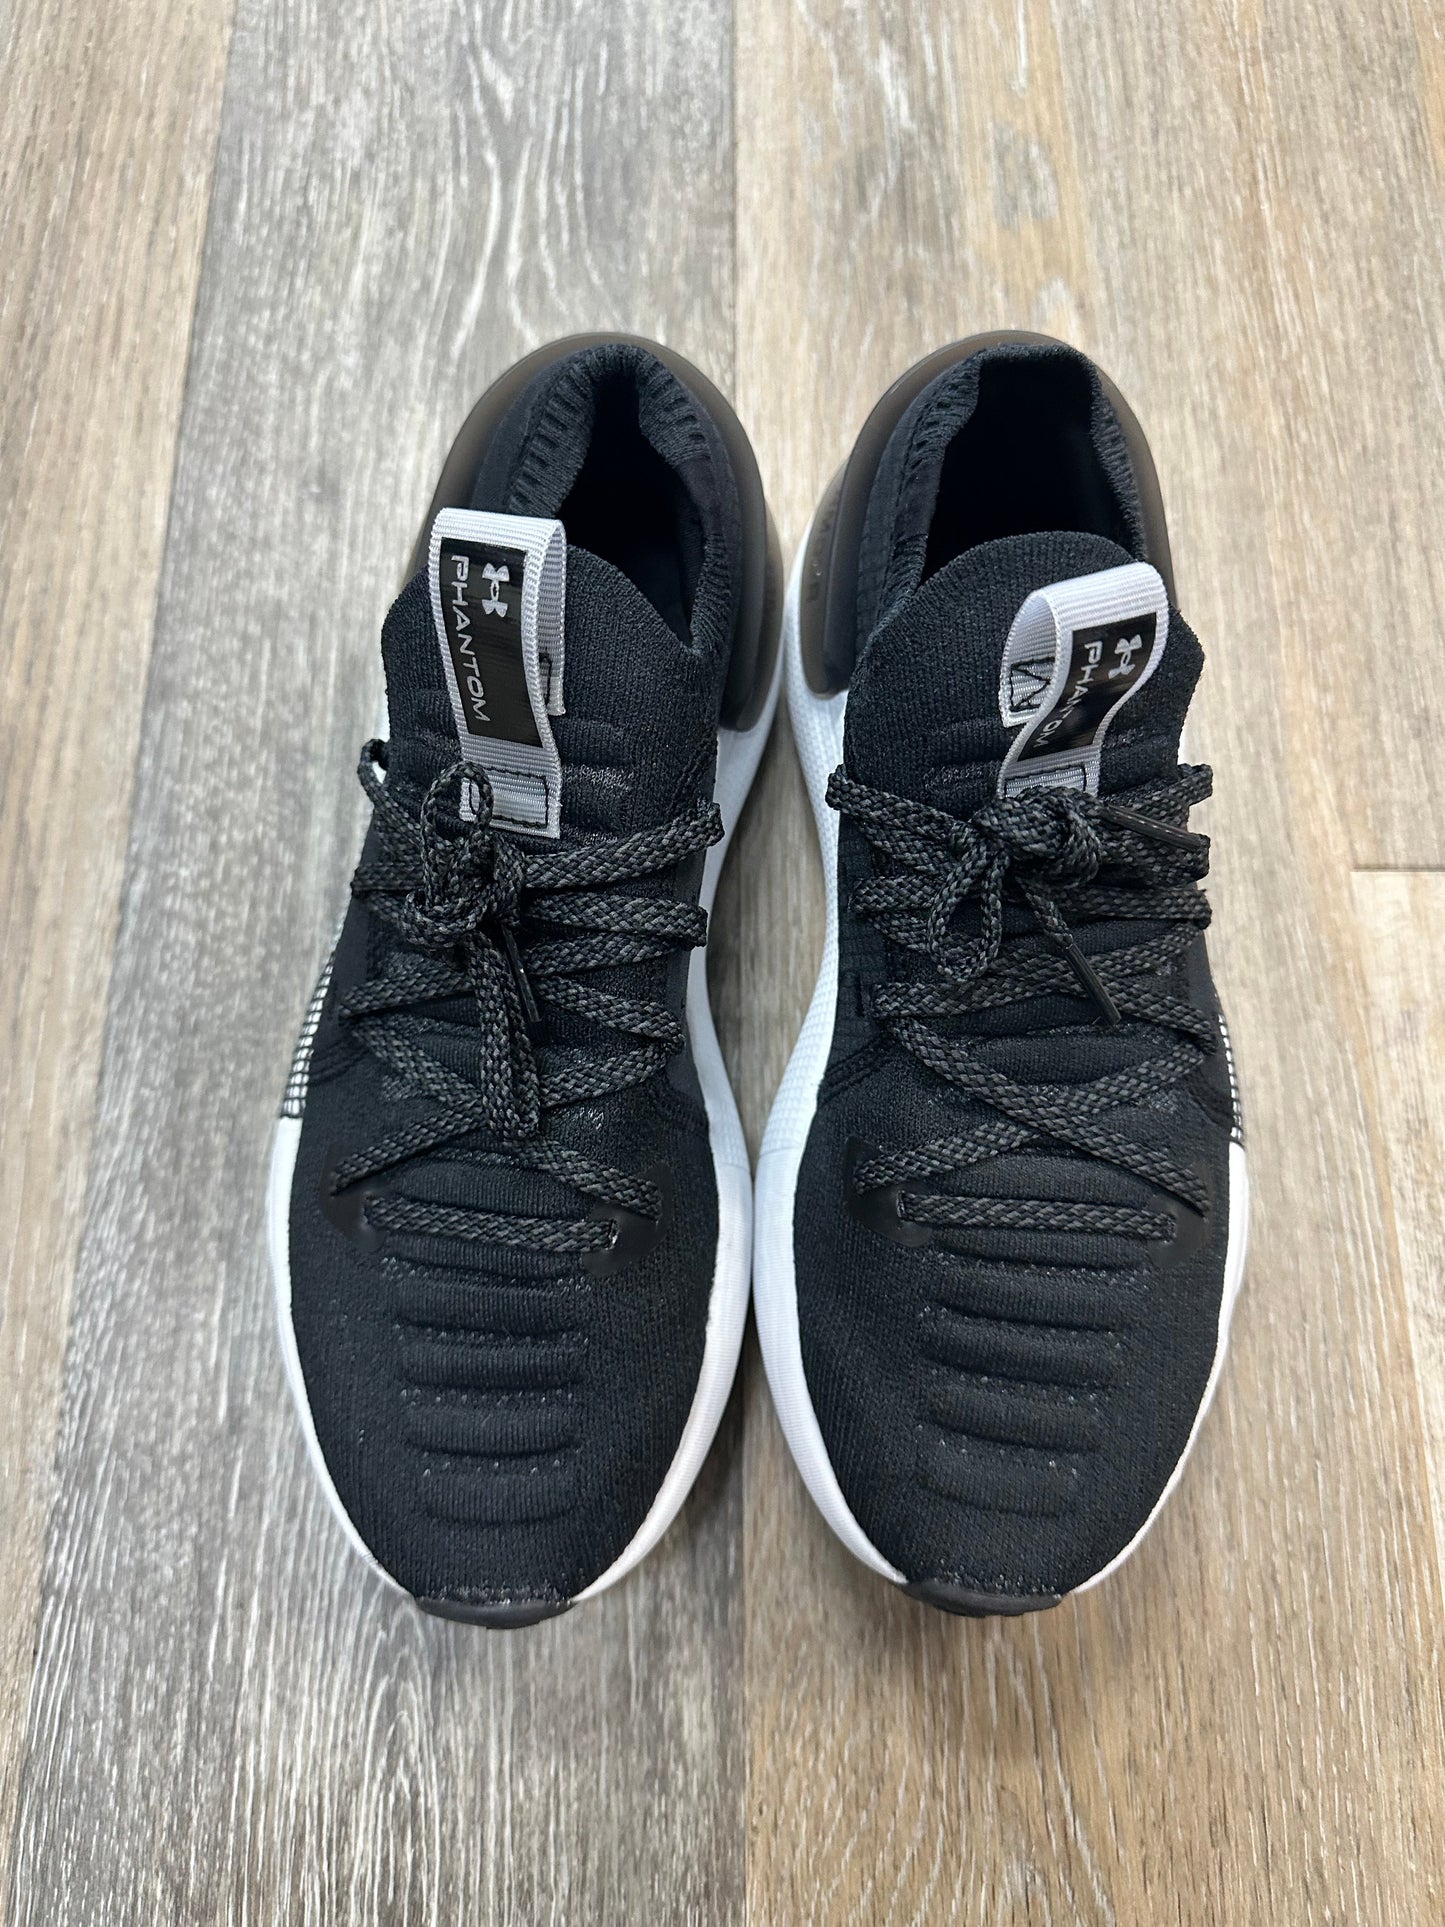 Black Shoes Athletic Under Armour, Size 7.5